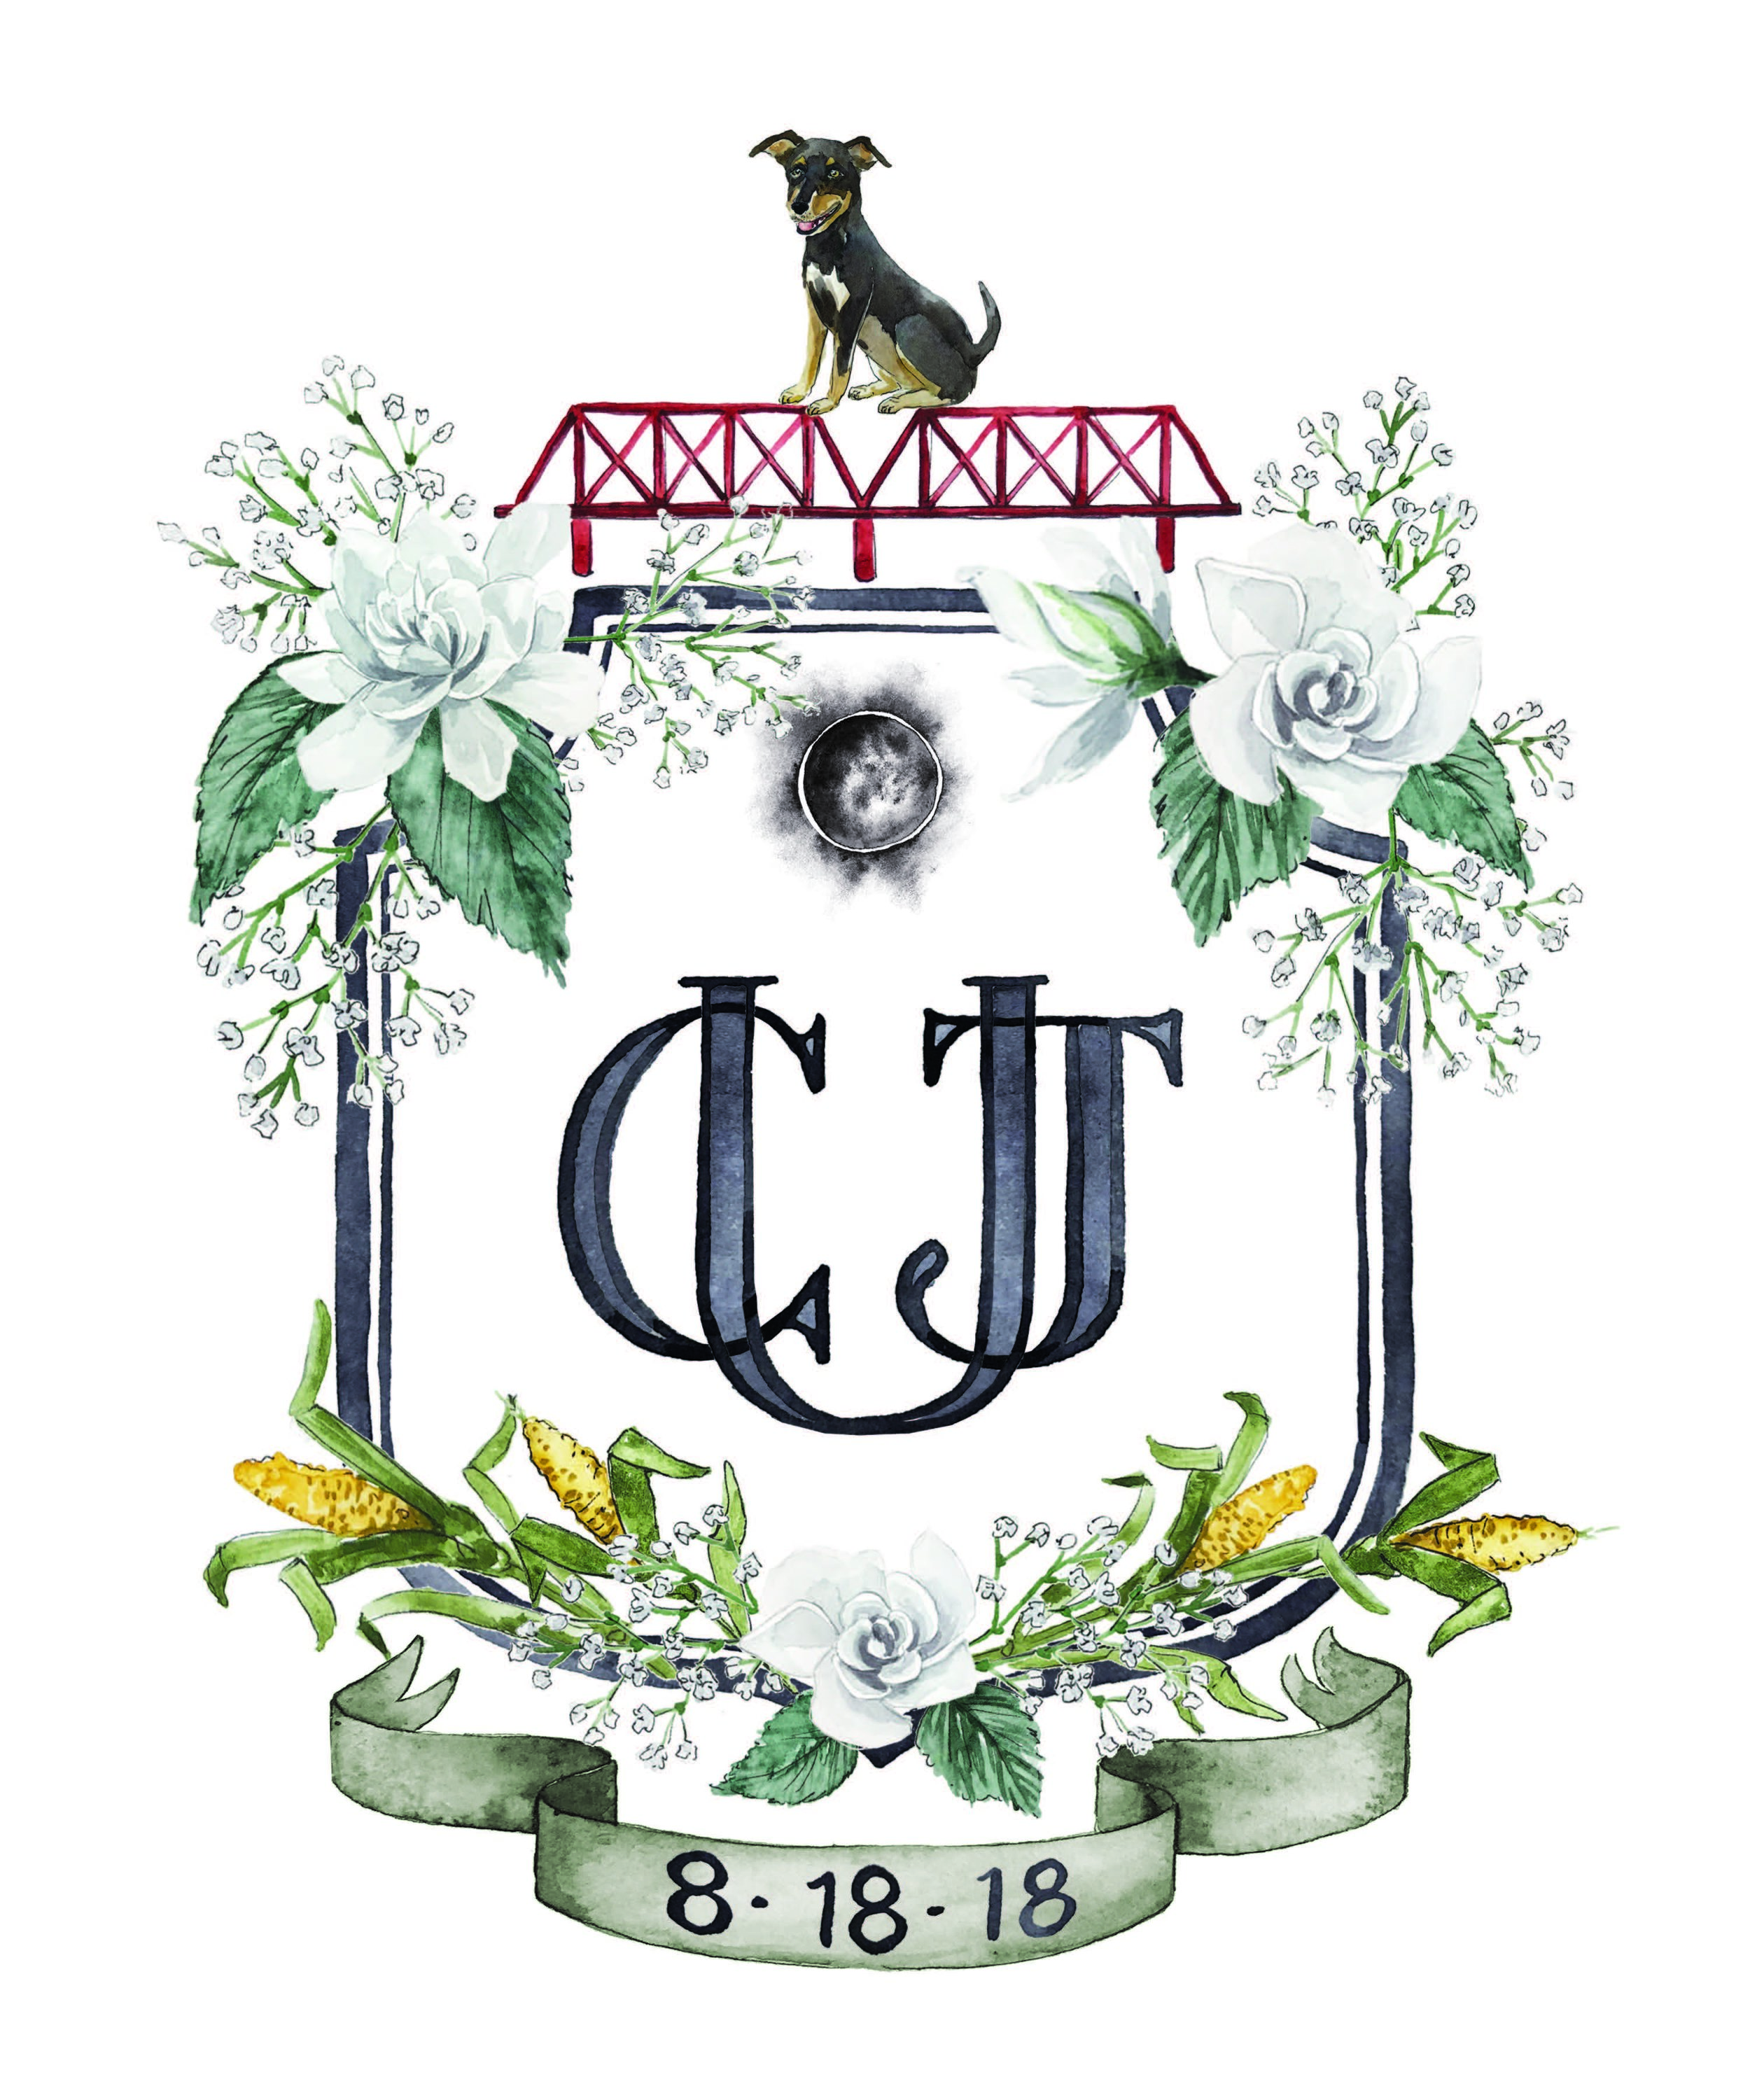 CUJ Wedding Crest 081818_Final_050418v1.jpg